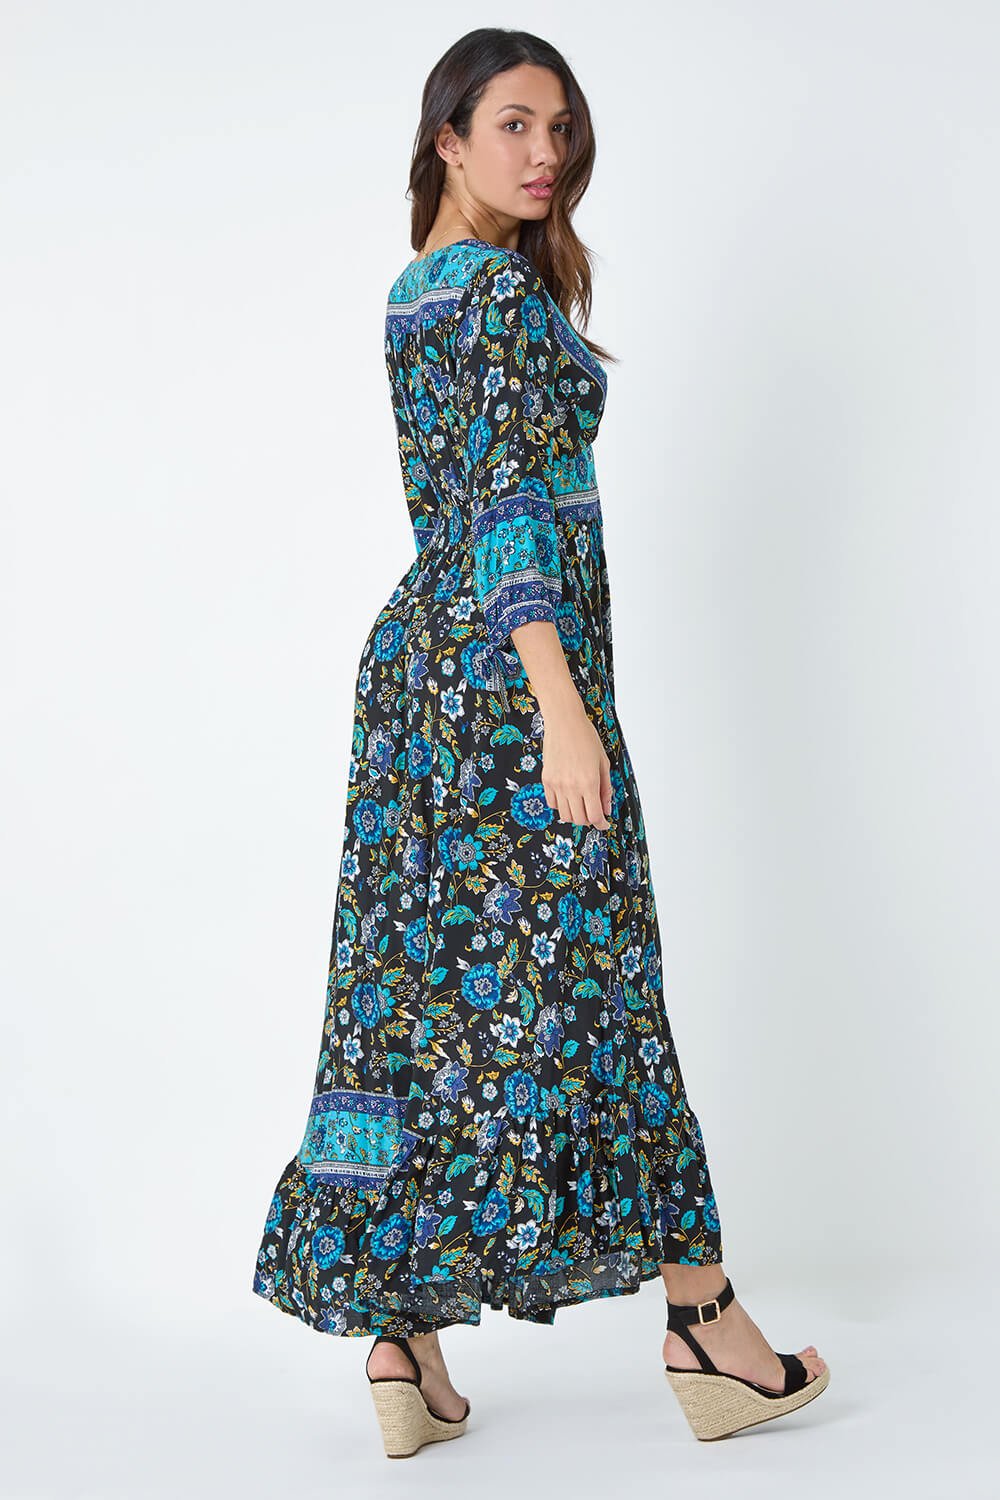 Black Floral Border Print Maxi Dress, Image 3 of 5